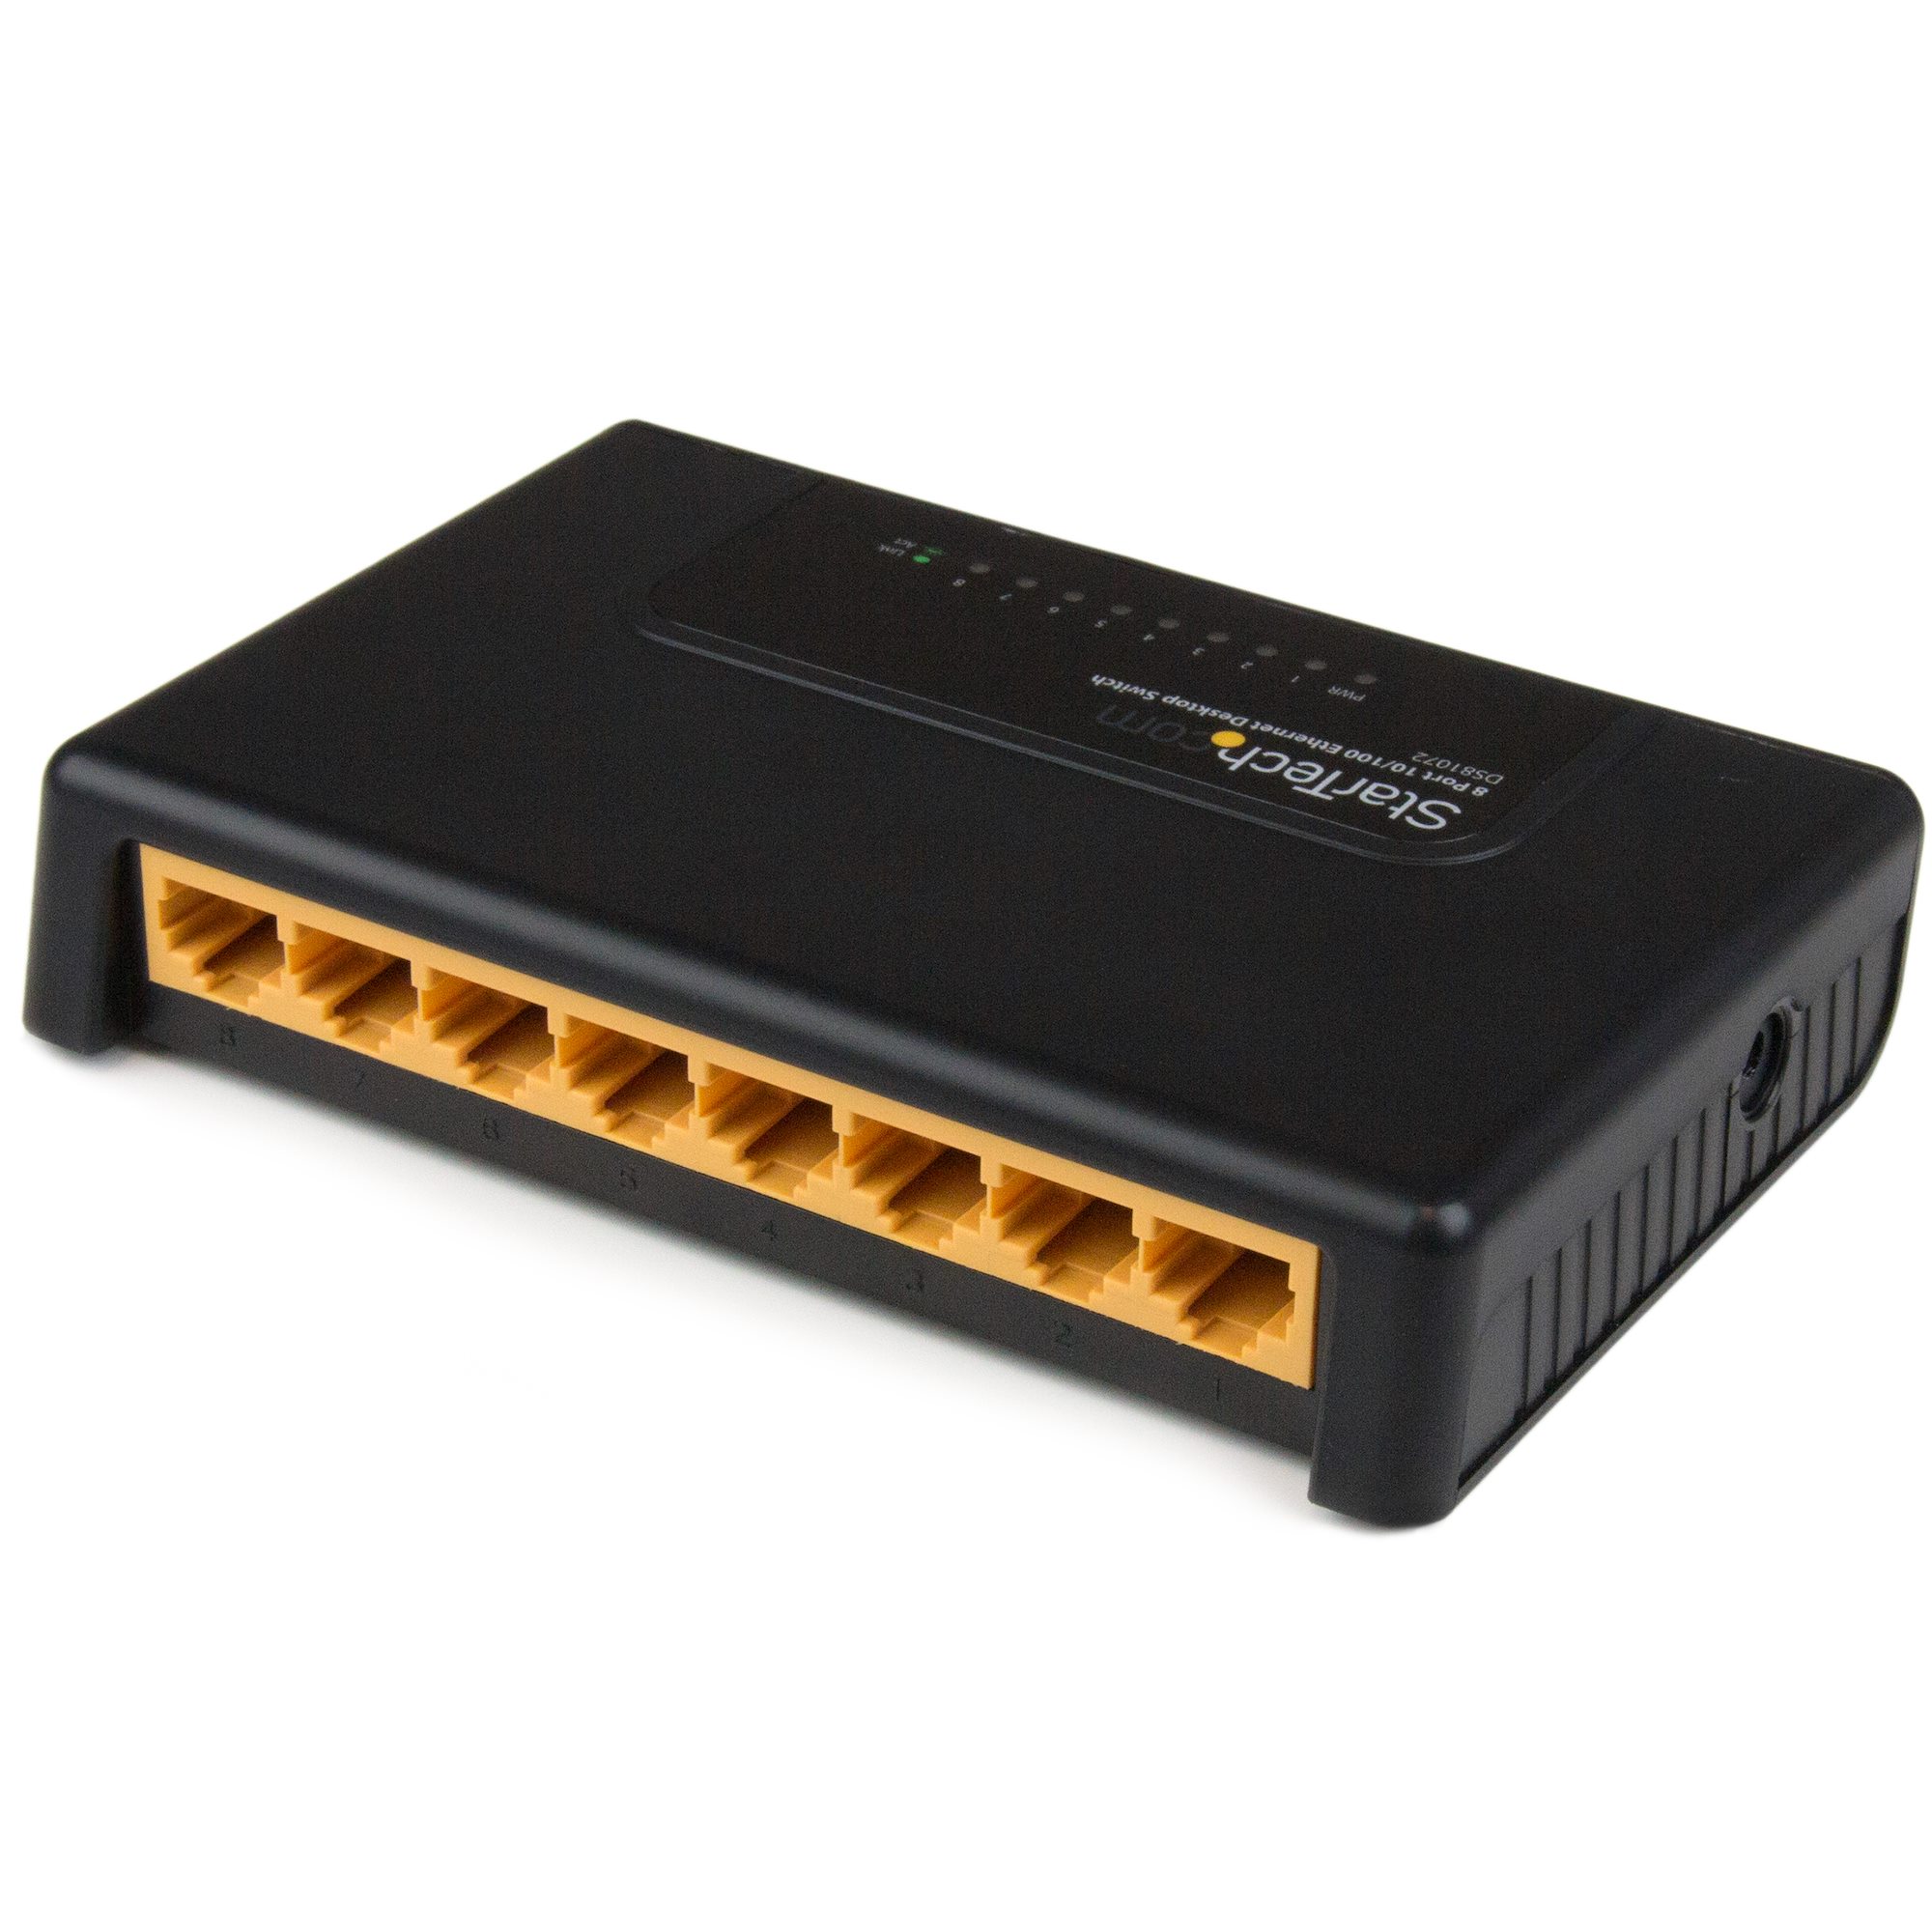 Фаст 100. Порт fast Ethernet. Гигабитный интернет. Fast Ethernet Mii. UNEX NEXTHUB hd080 8 Port.